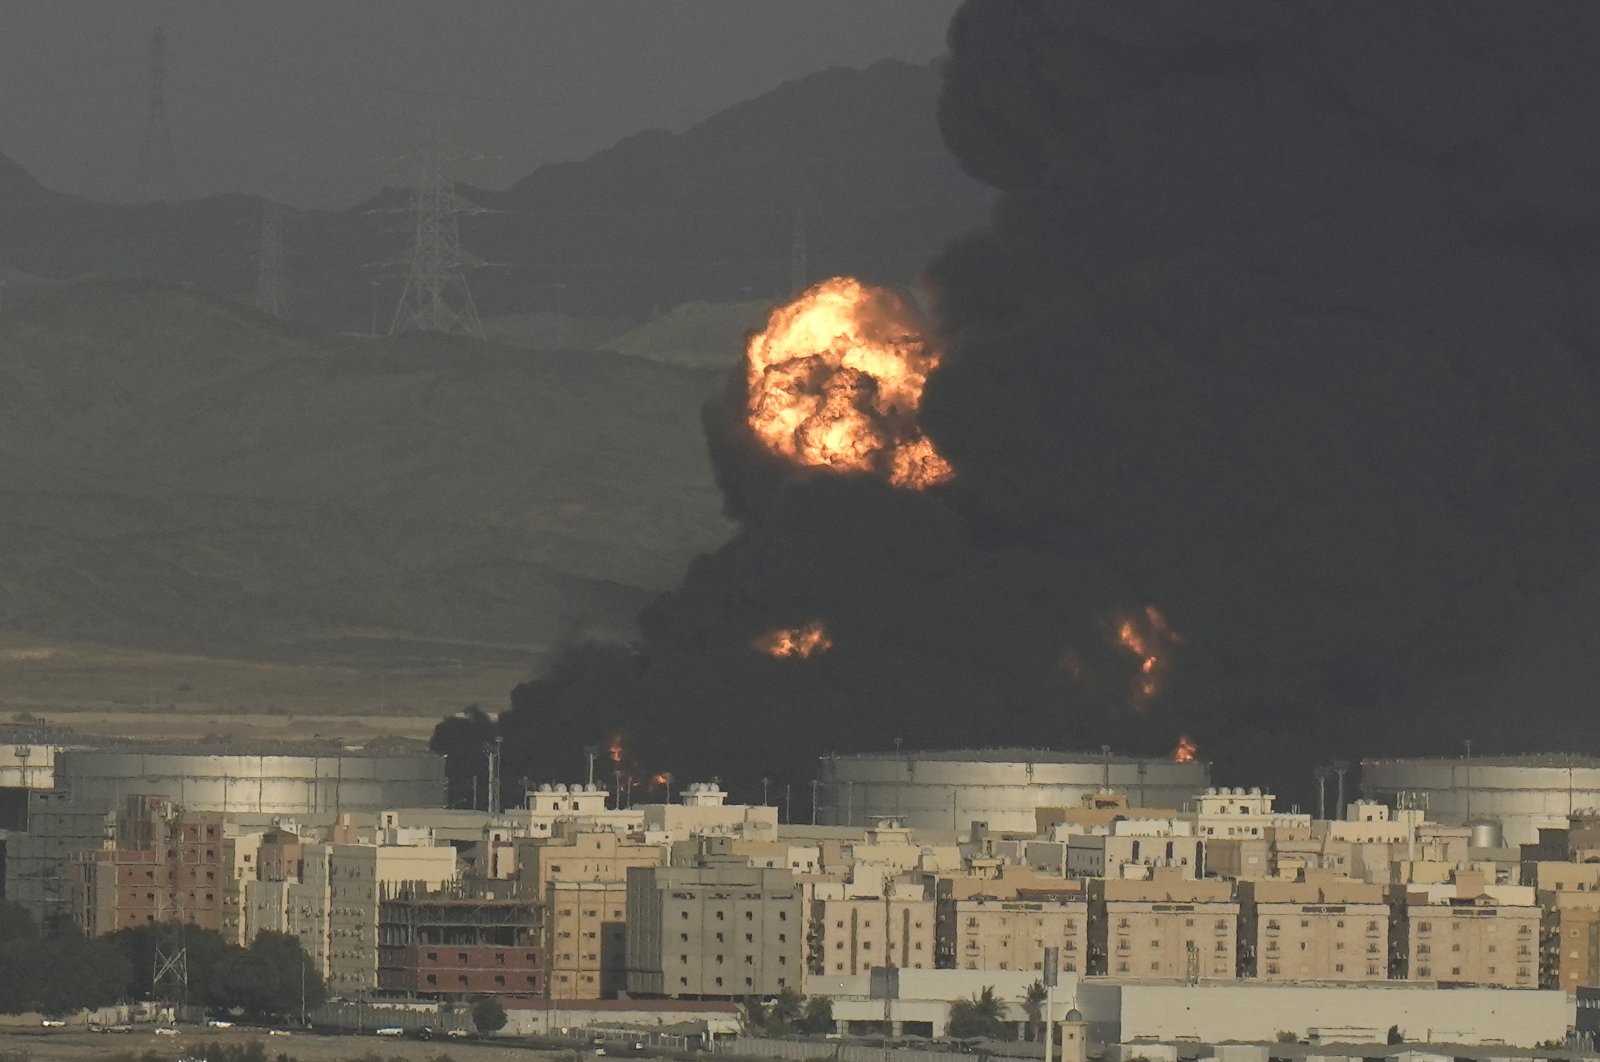 A cloud of smoke rises from a burning oil depot in Jiddah, Saudi Arabia, Friday, March 25, 2022. (AP Photo)